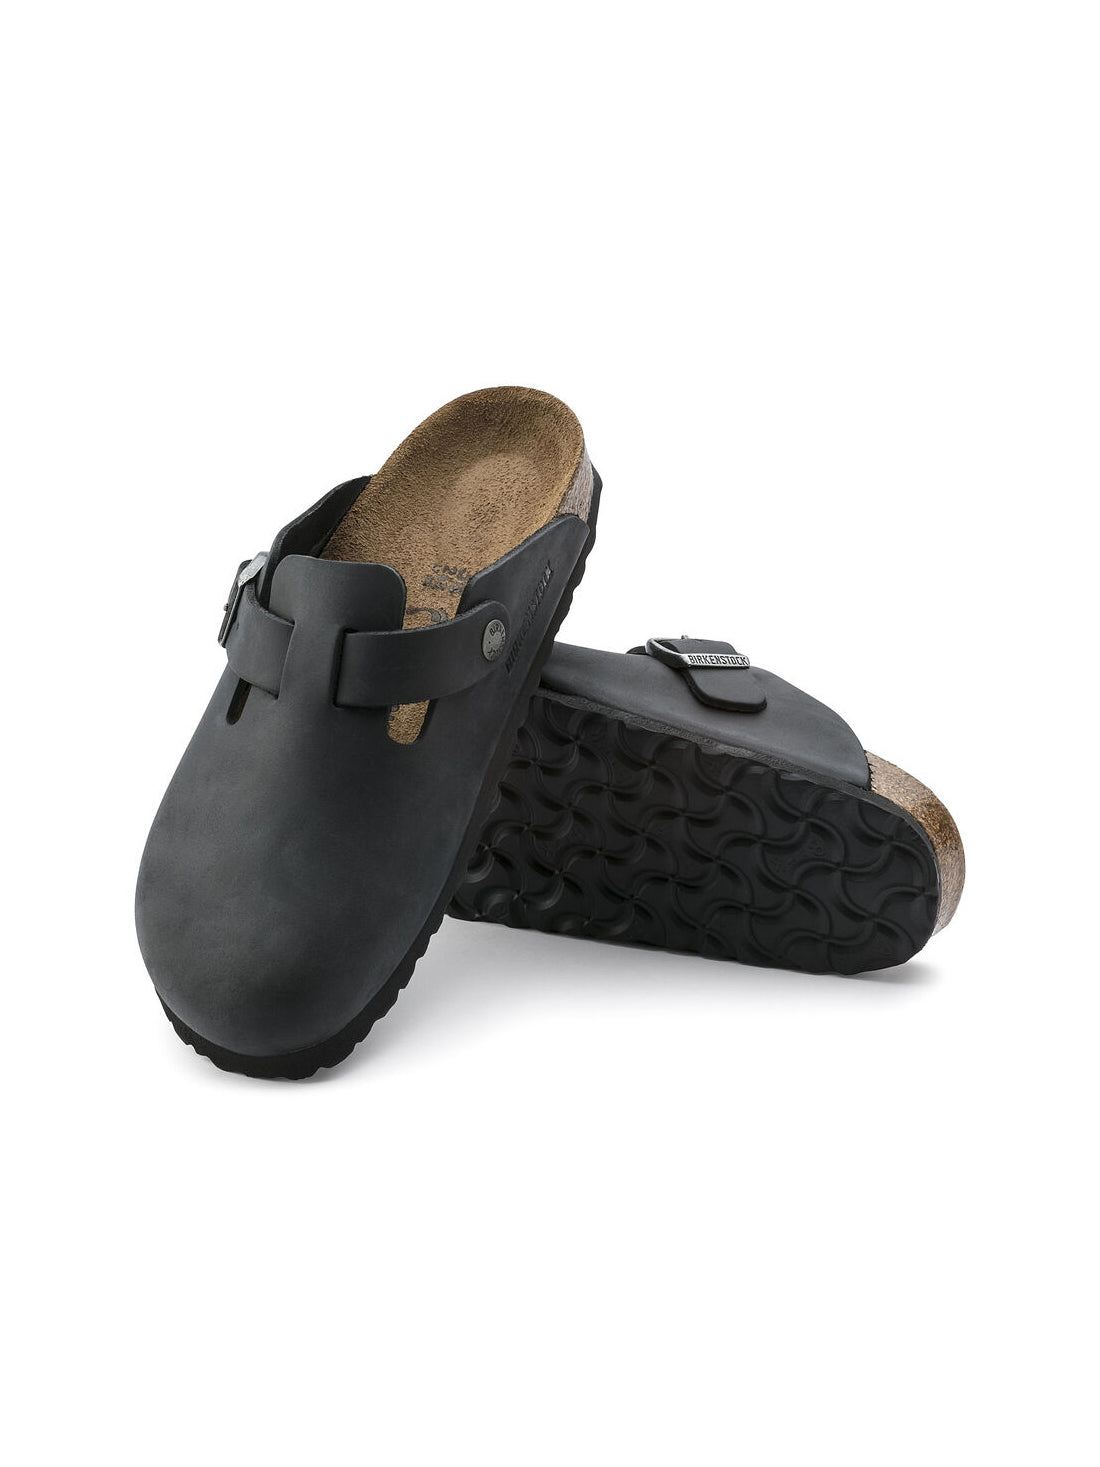 birkenstock boston clog soft footbed in black oiled leather